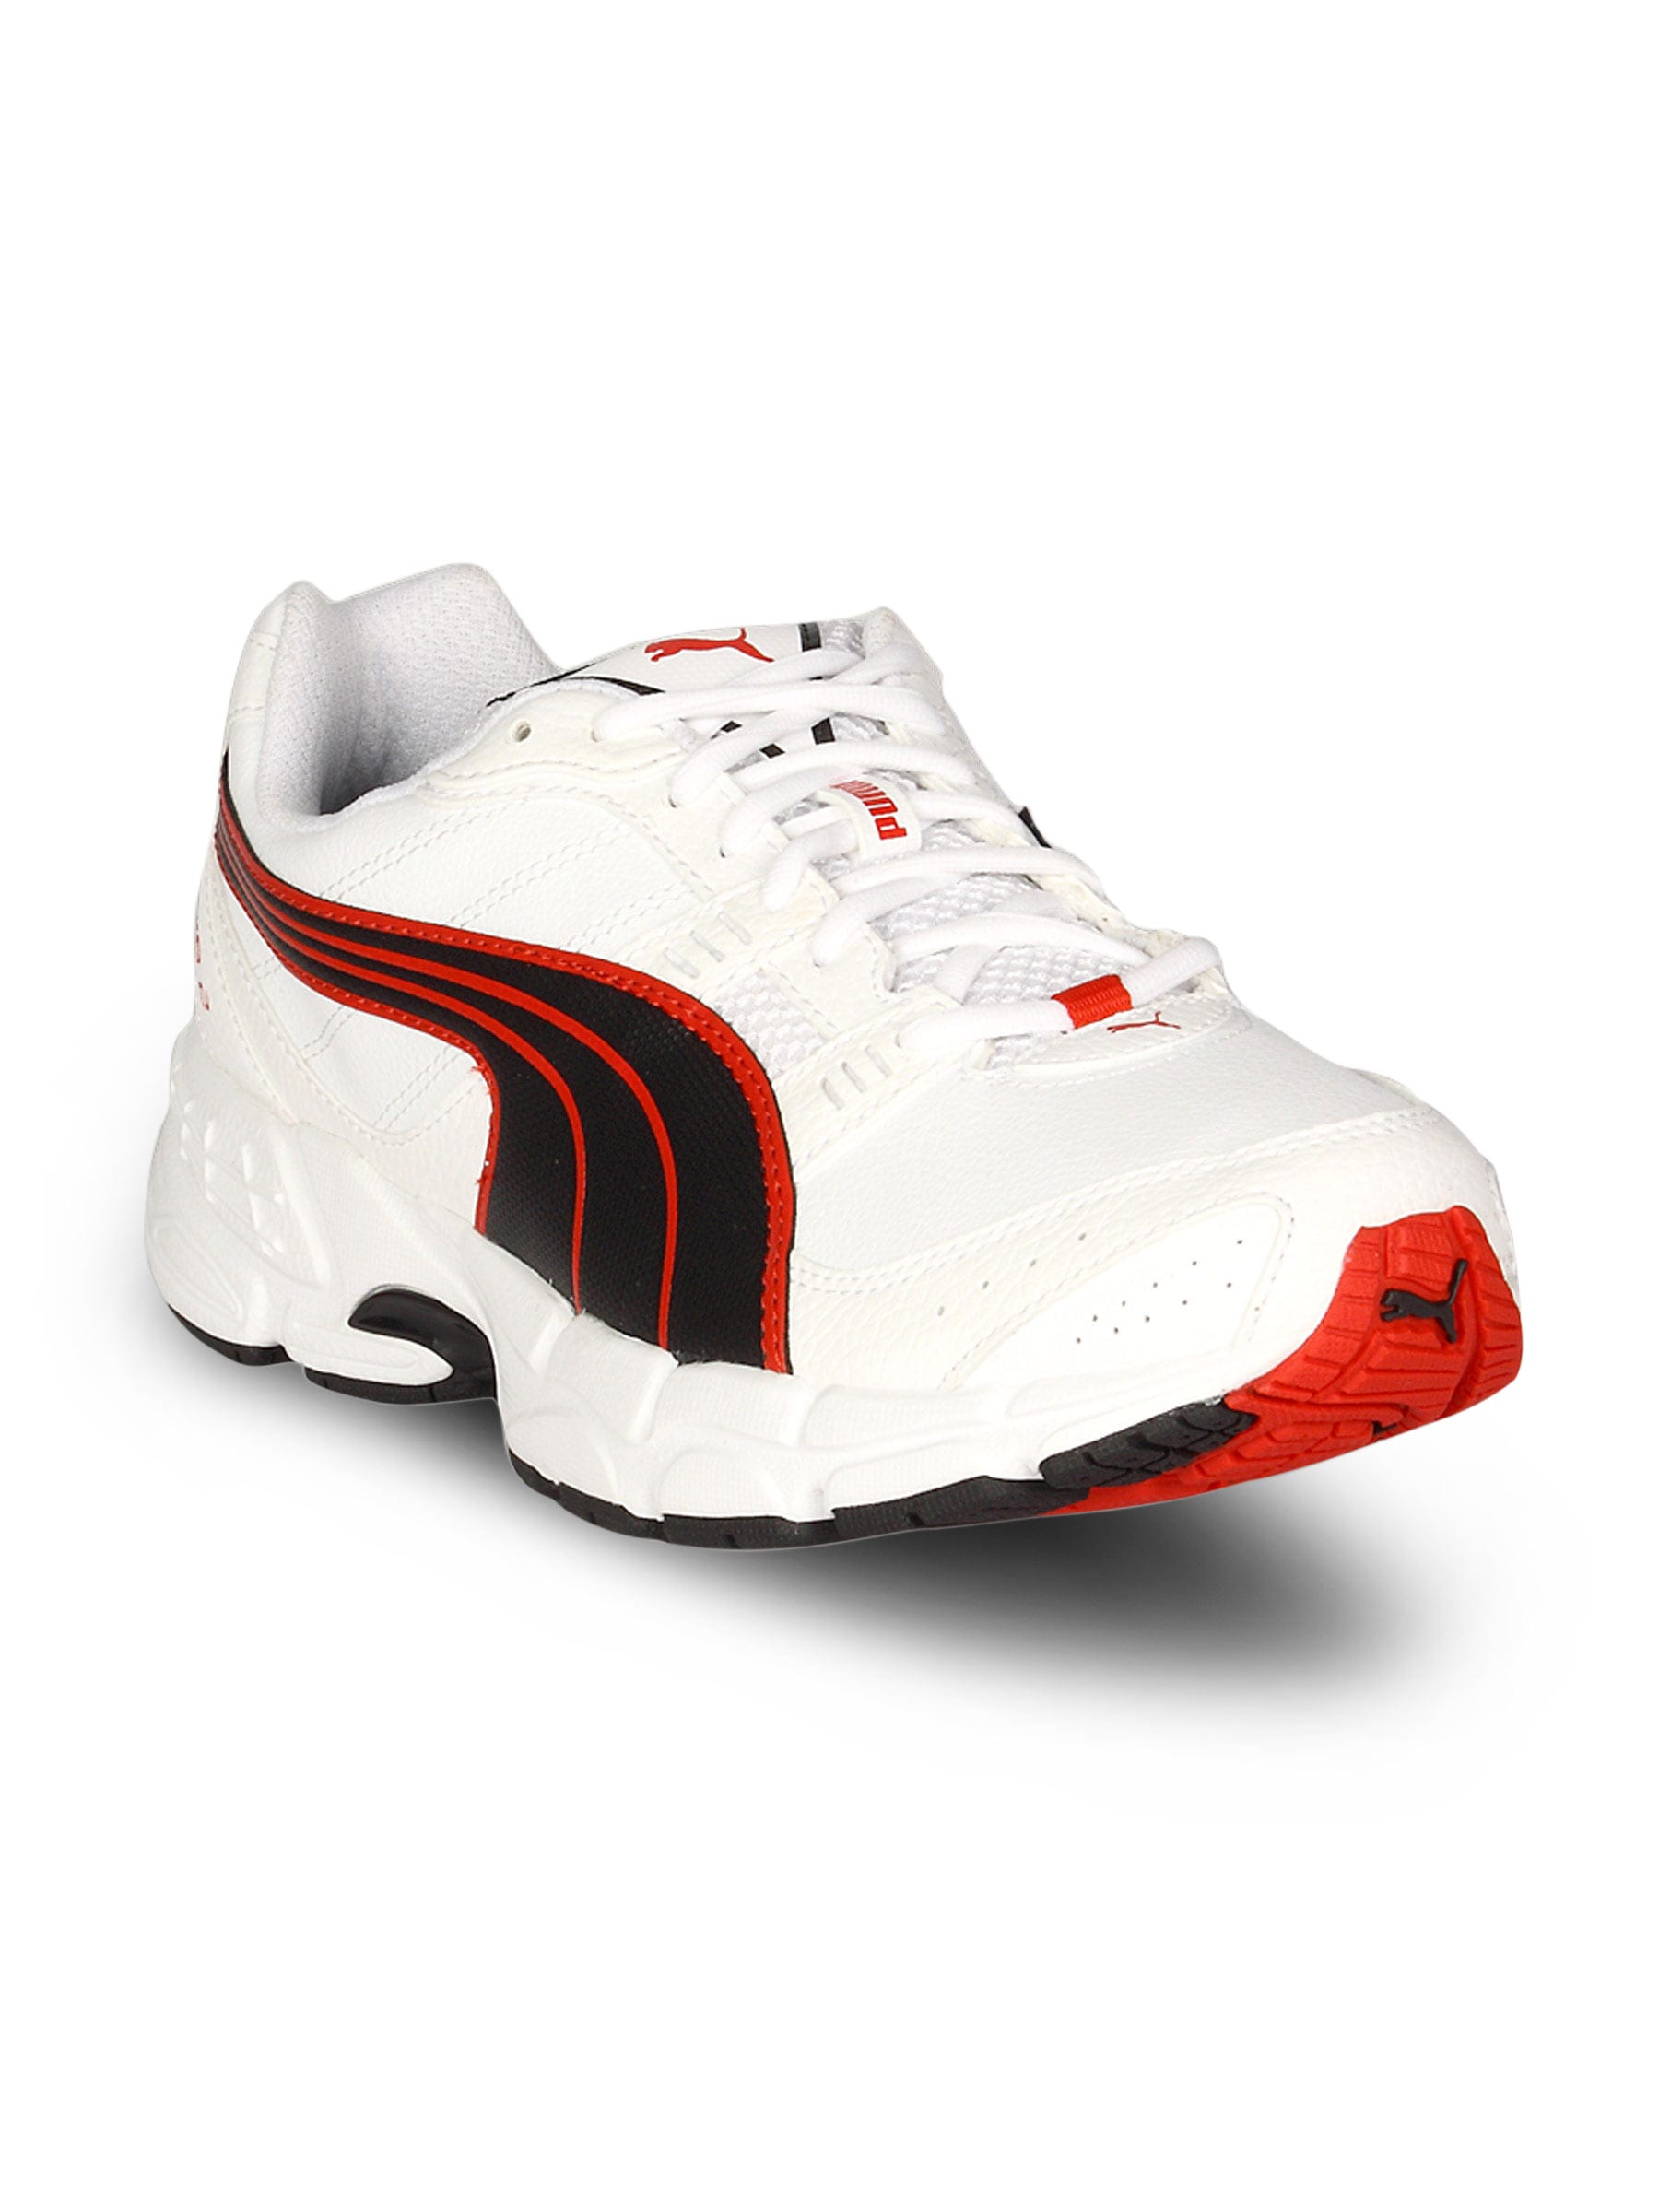 Puma Men's Ikonis White Black Red Shoe